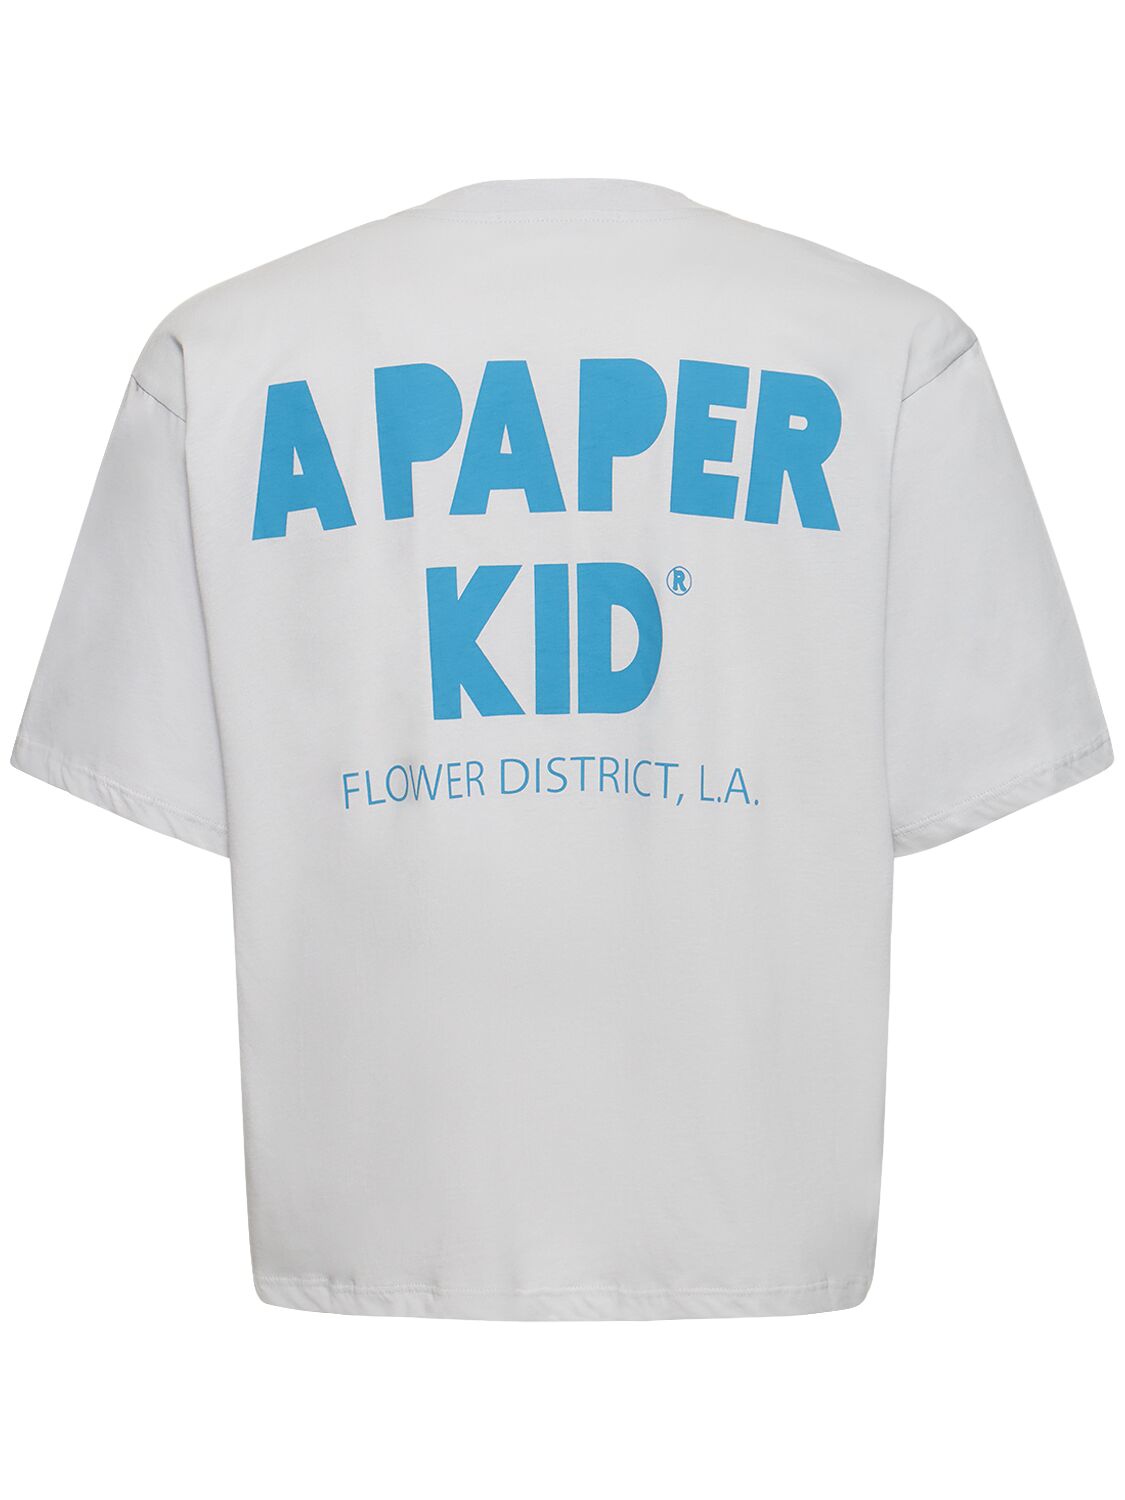 A PAPER KID Unisex T-shirt